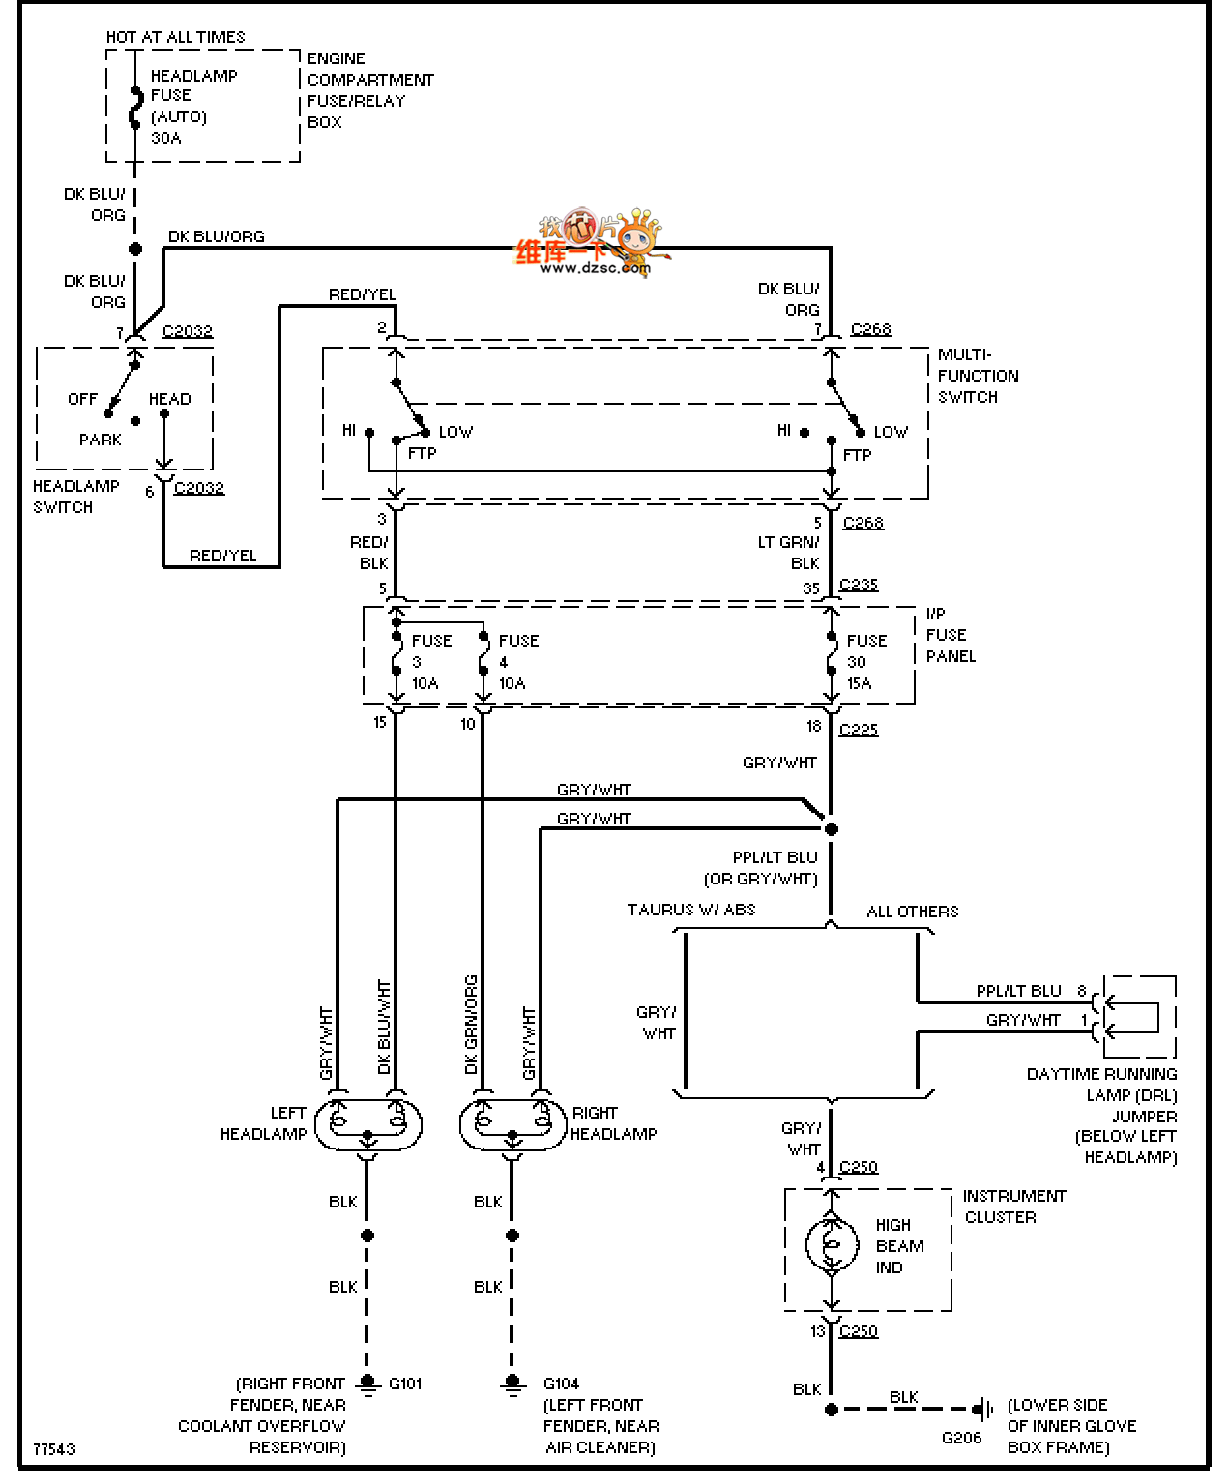 Mazda 96TAURUS (no DRL) headlight circuit diagram